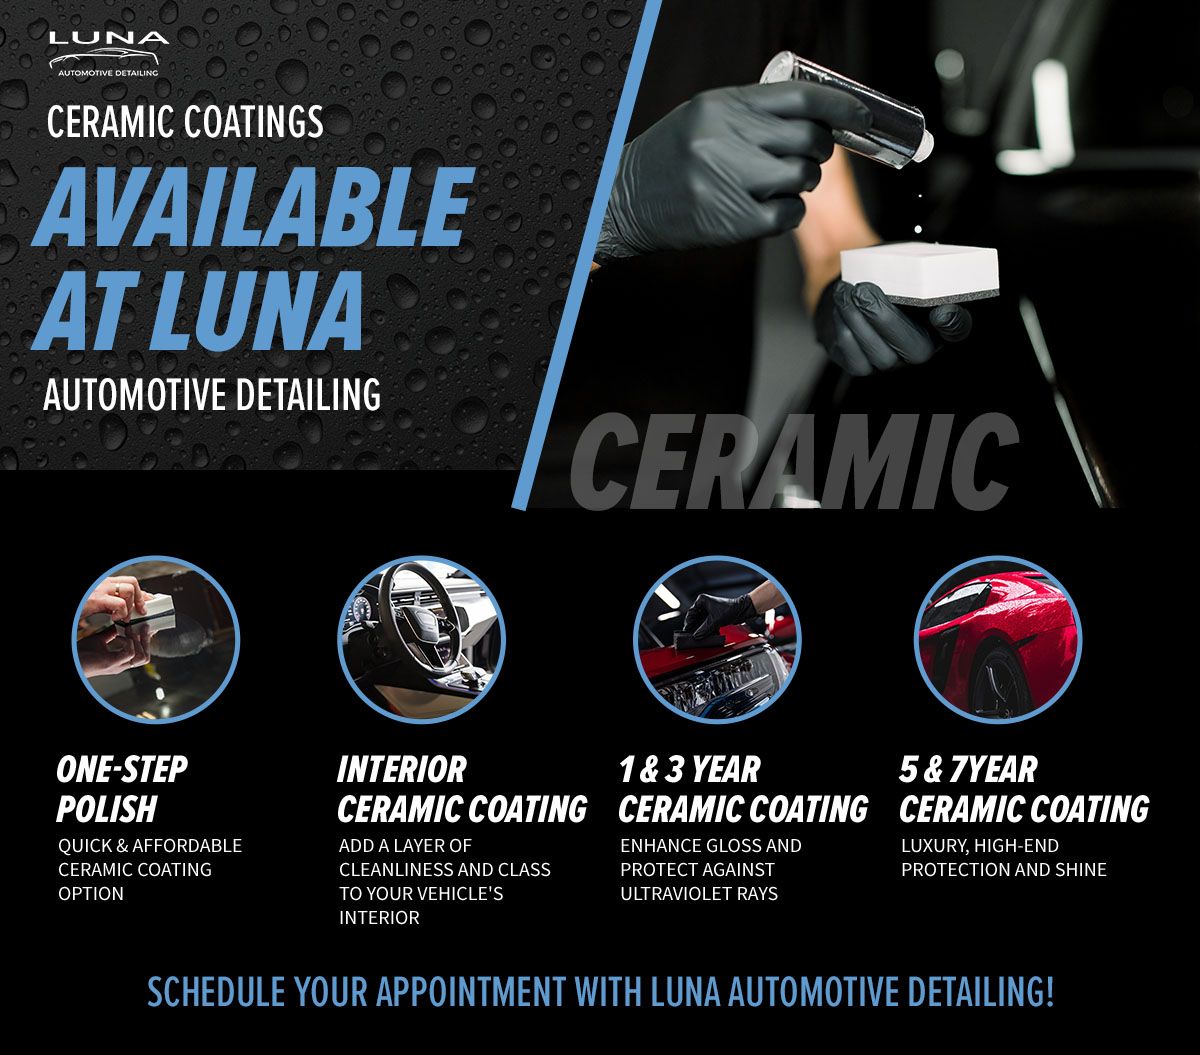 Ceramic Coatings Available at Luna Automotive Detailing - IG.jpg